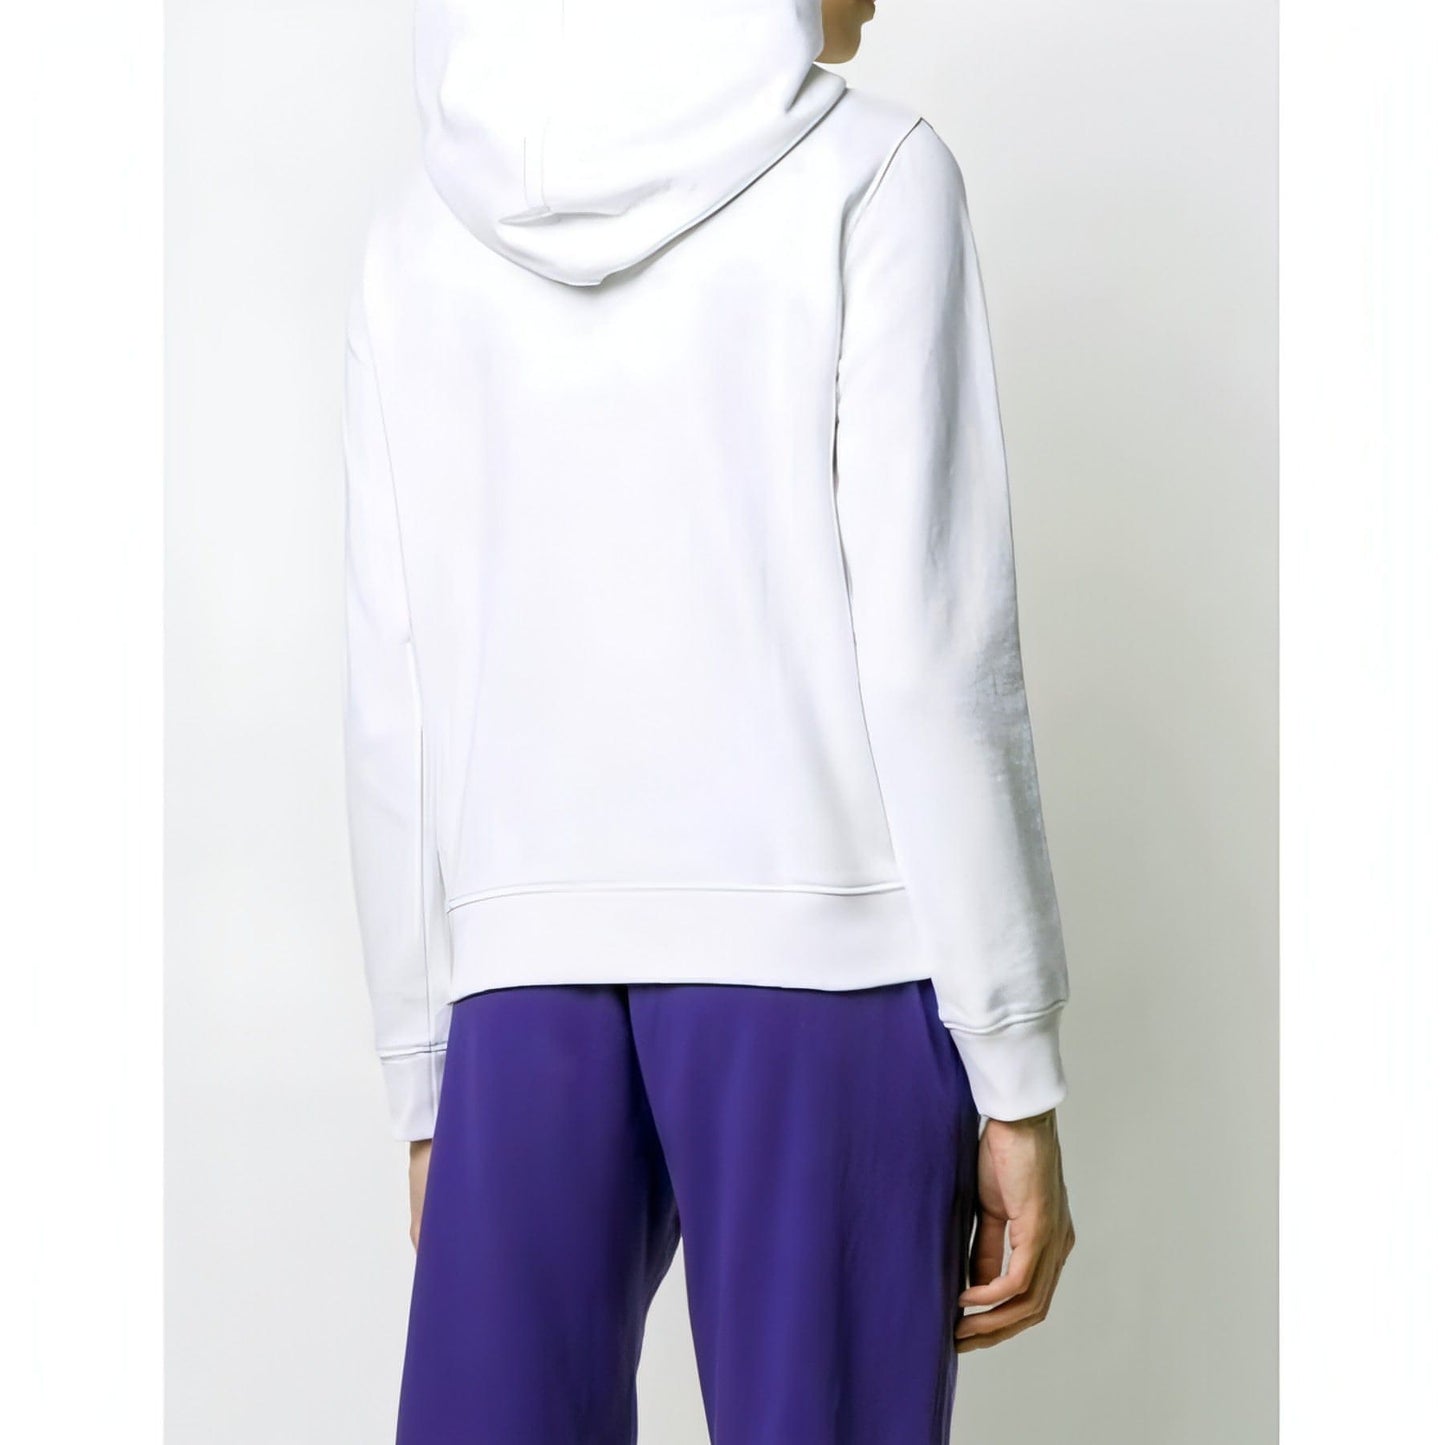 CALVIN KLEIN moteriškas baltas džemperis